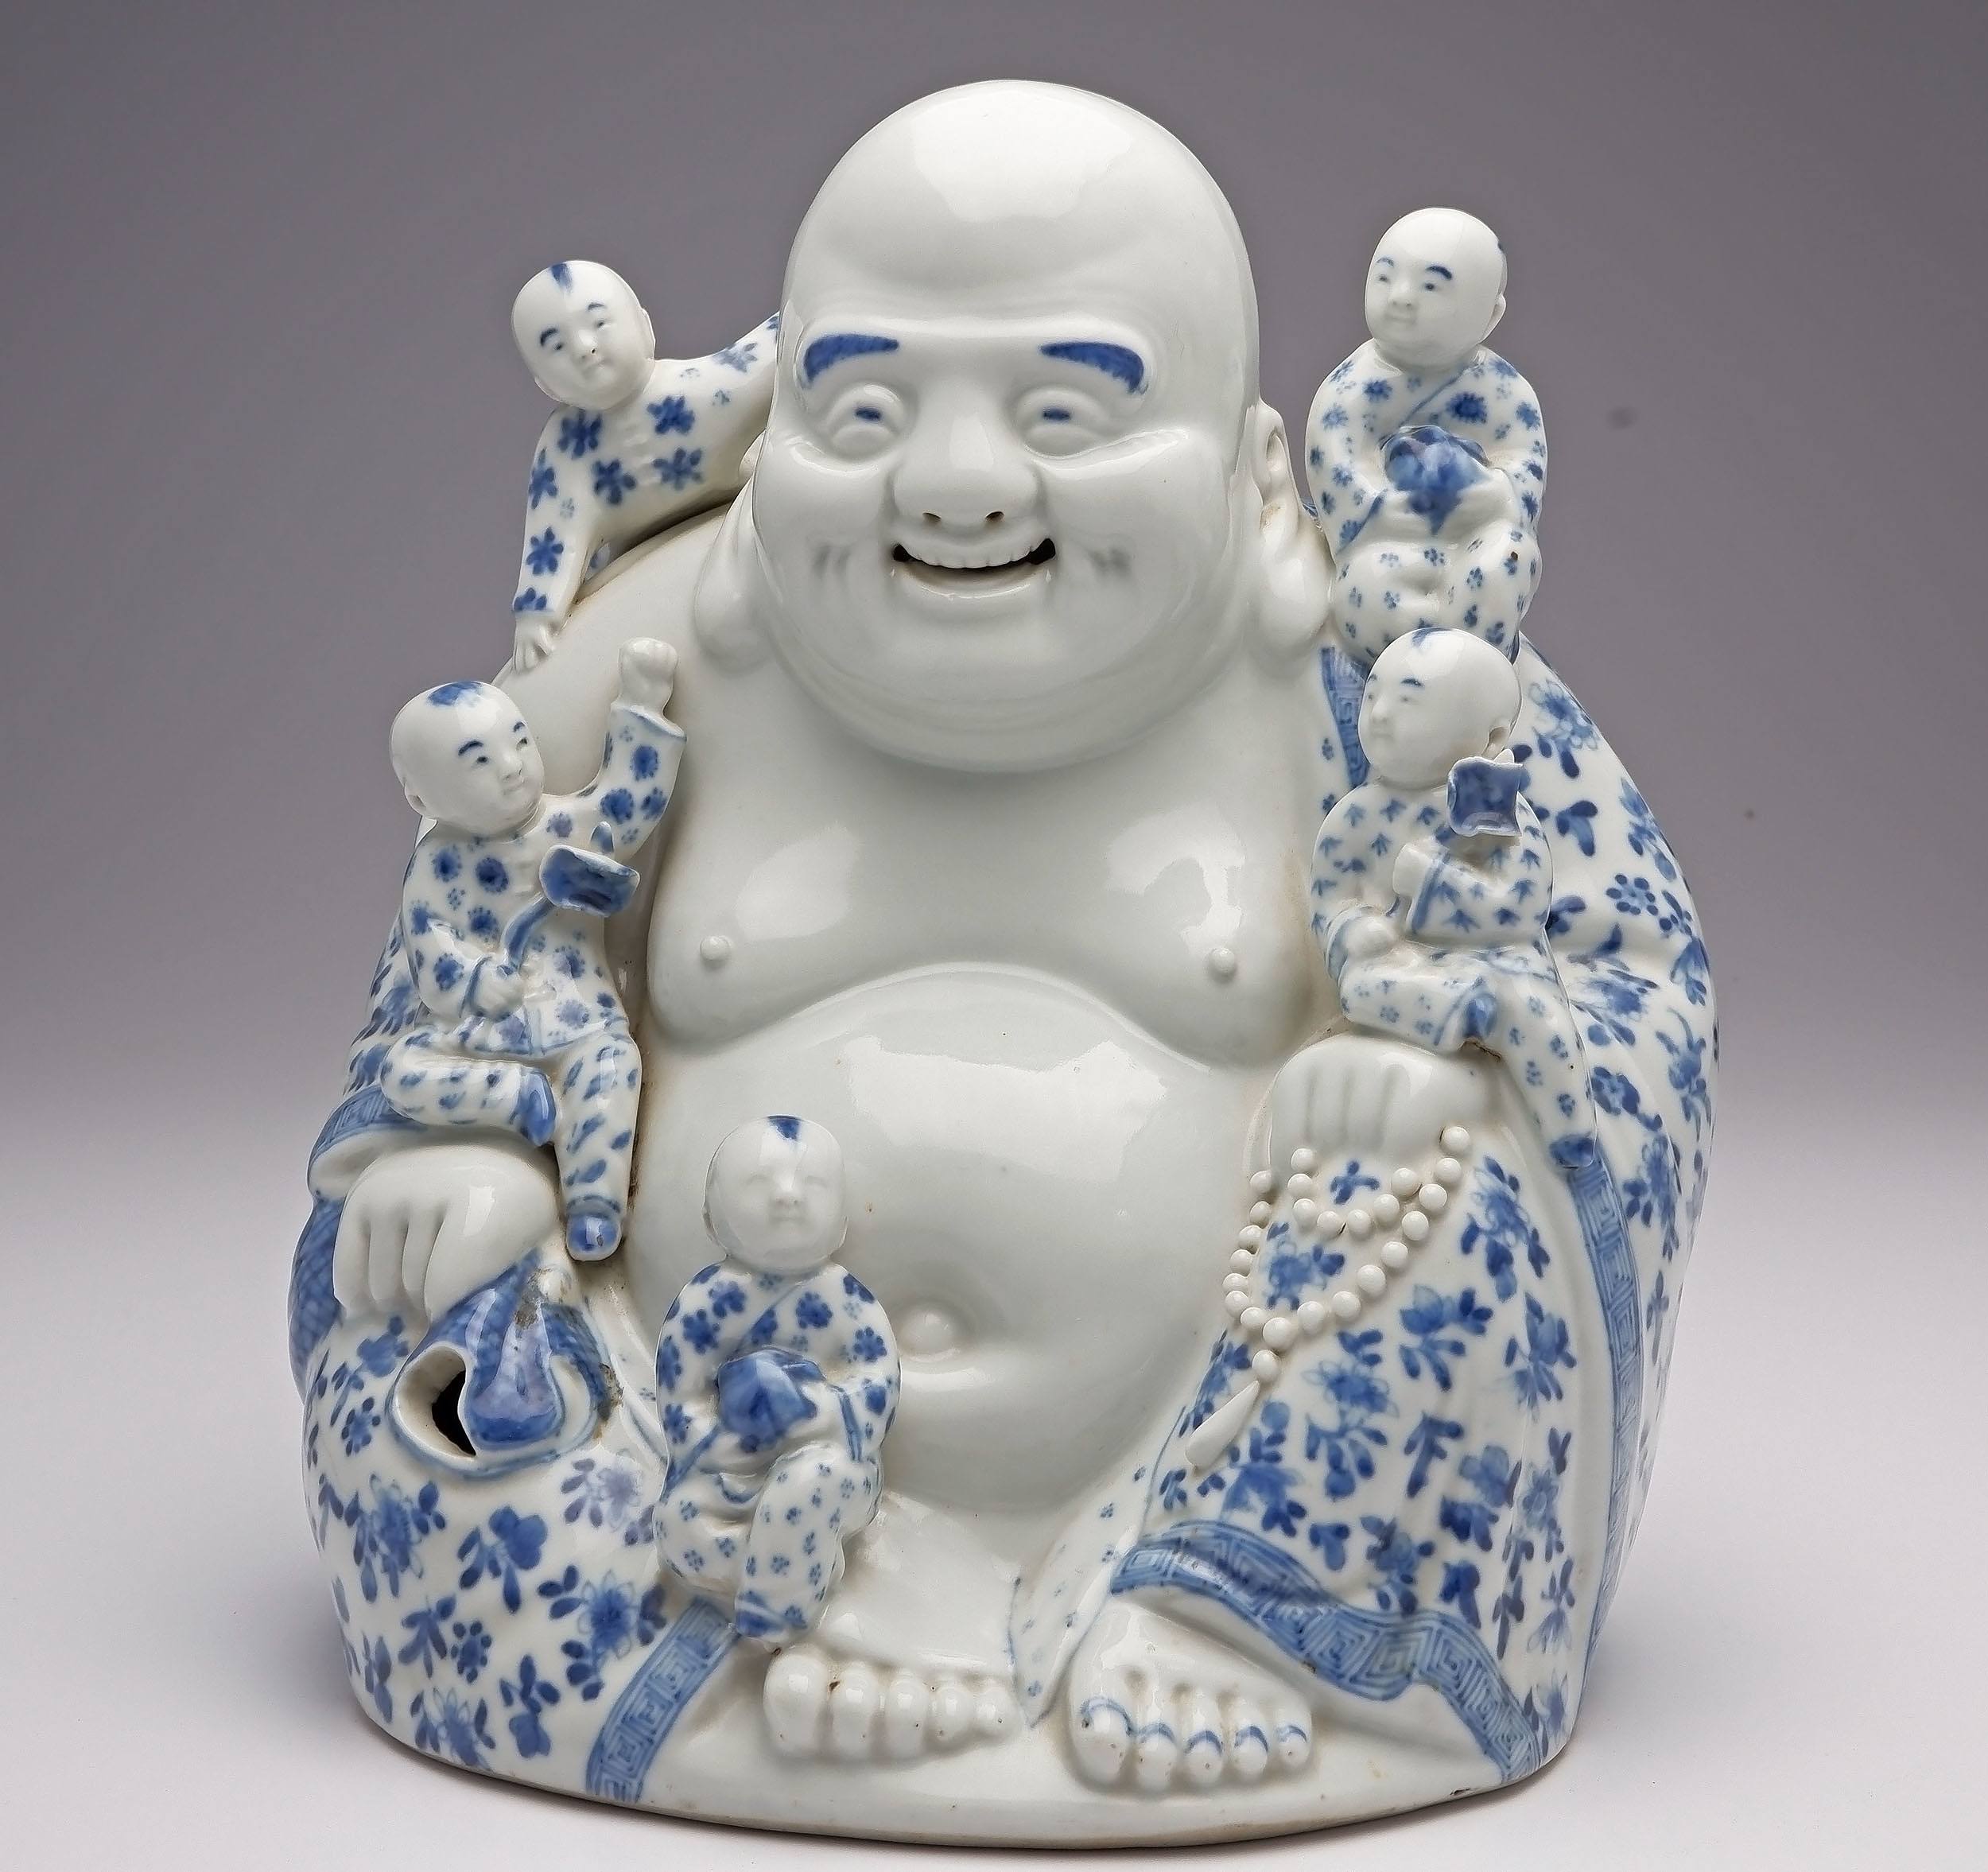 'Rare Chinese Blue and White Buddha Budai with Five Boys, Wei Hong Tai Mark, Republic Period'